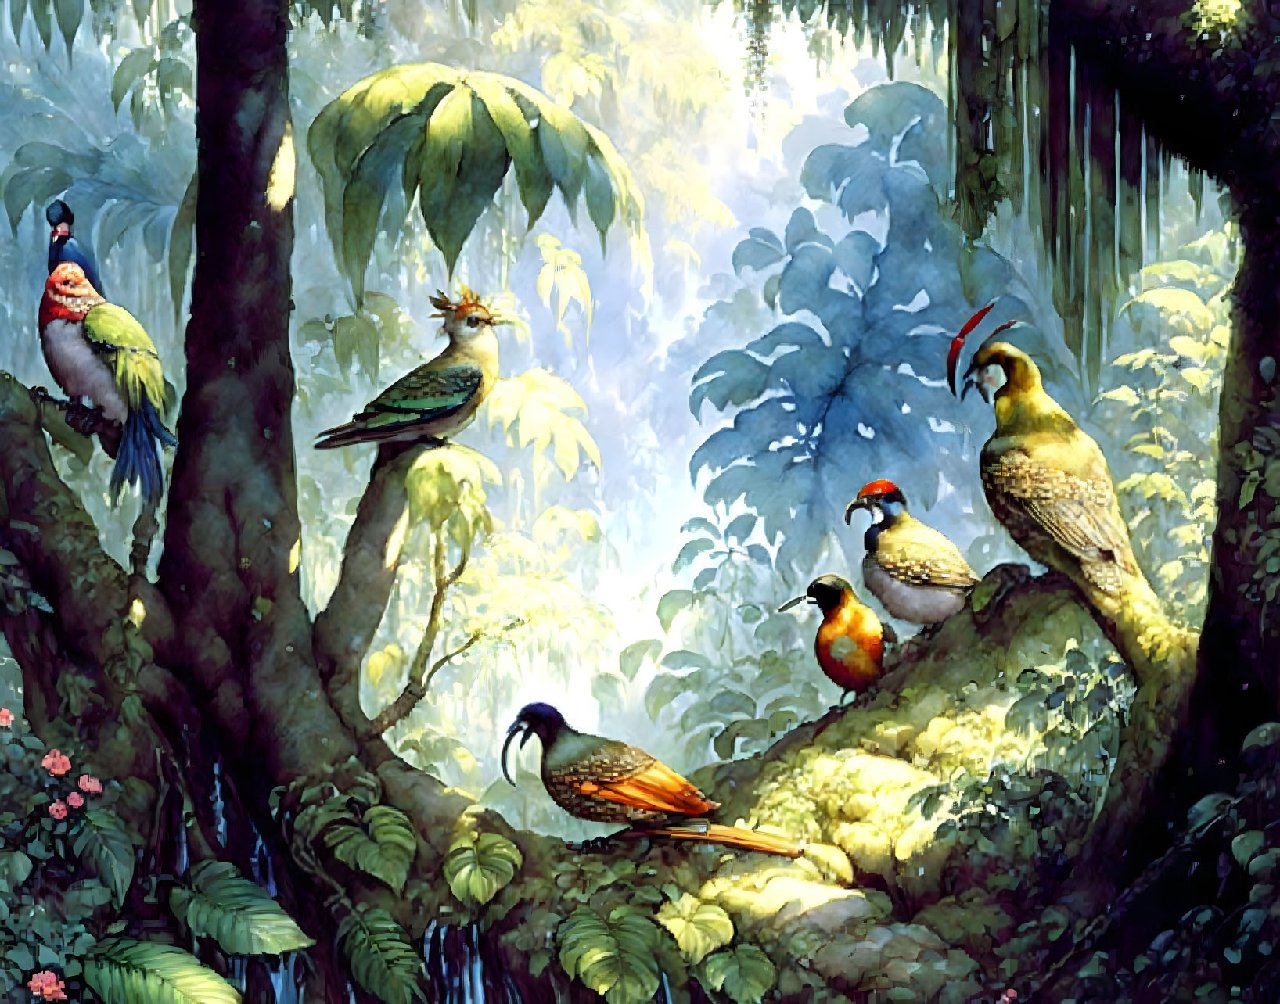 Copy of Tropical birds in rainforest aiprompt watercolor 1280px x 1004 px Plien 2023.jpeg